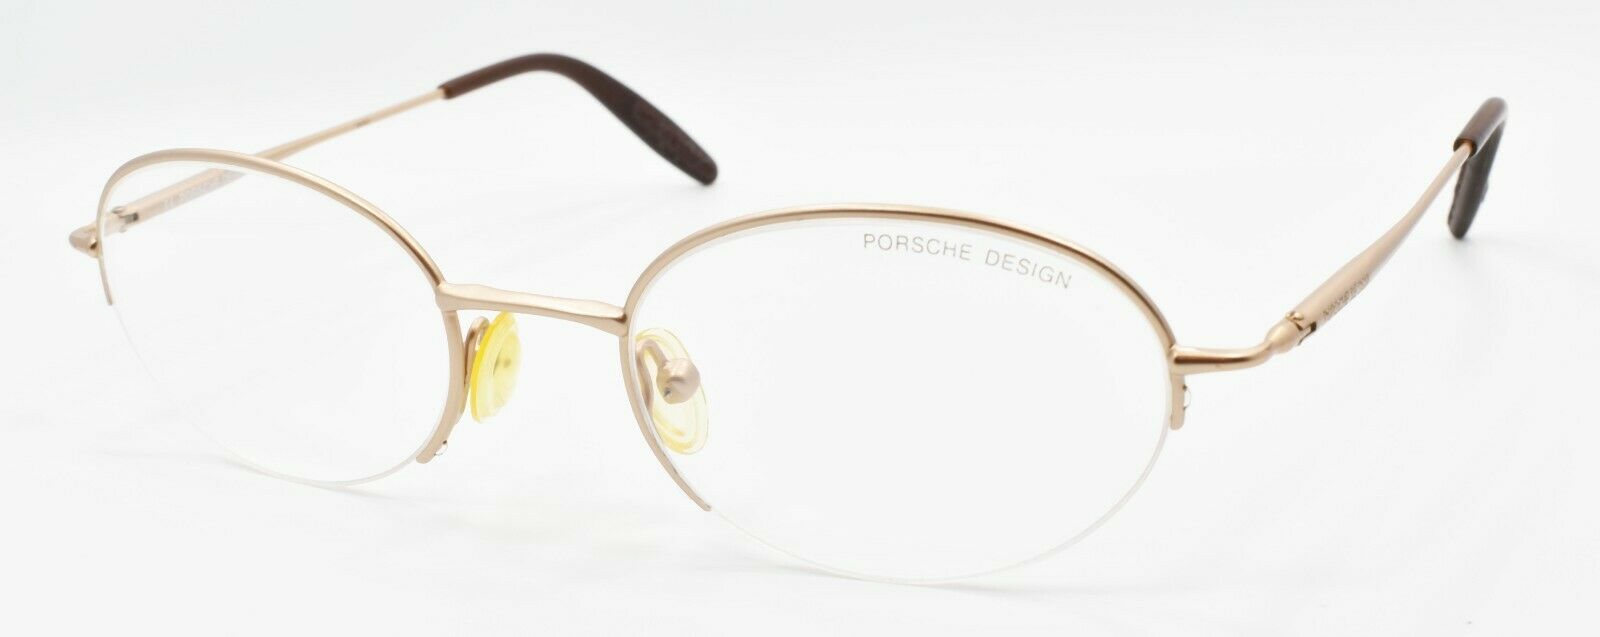 1-Porsche Design P7001 B Eyeglasses Frames Half-rim SMALL 48-20-130 Gold ITALY-4035247505397-IKSpecs